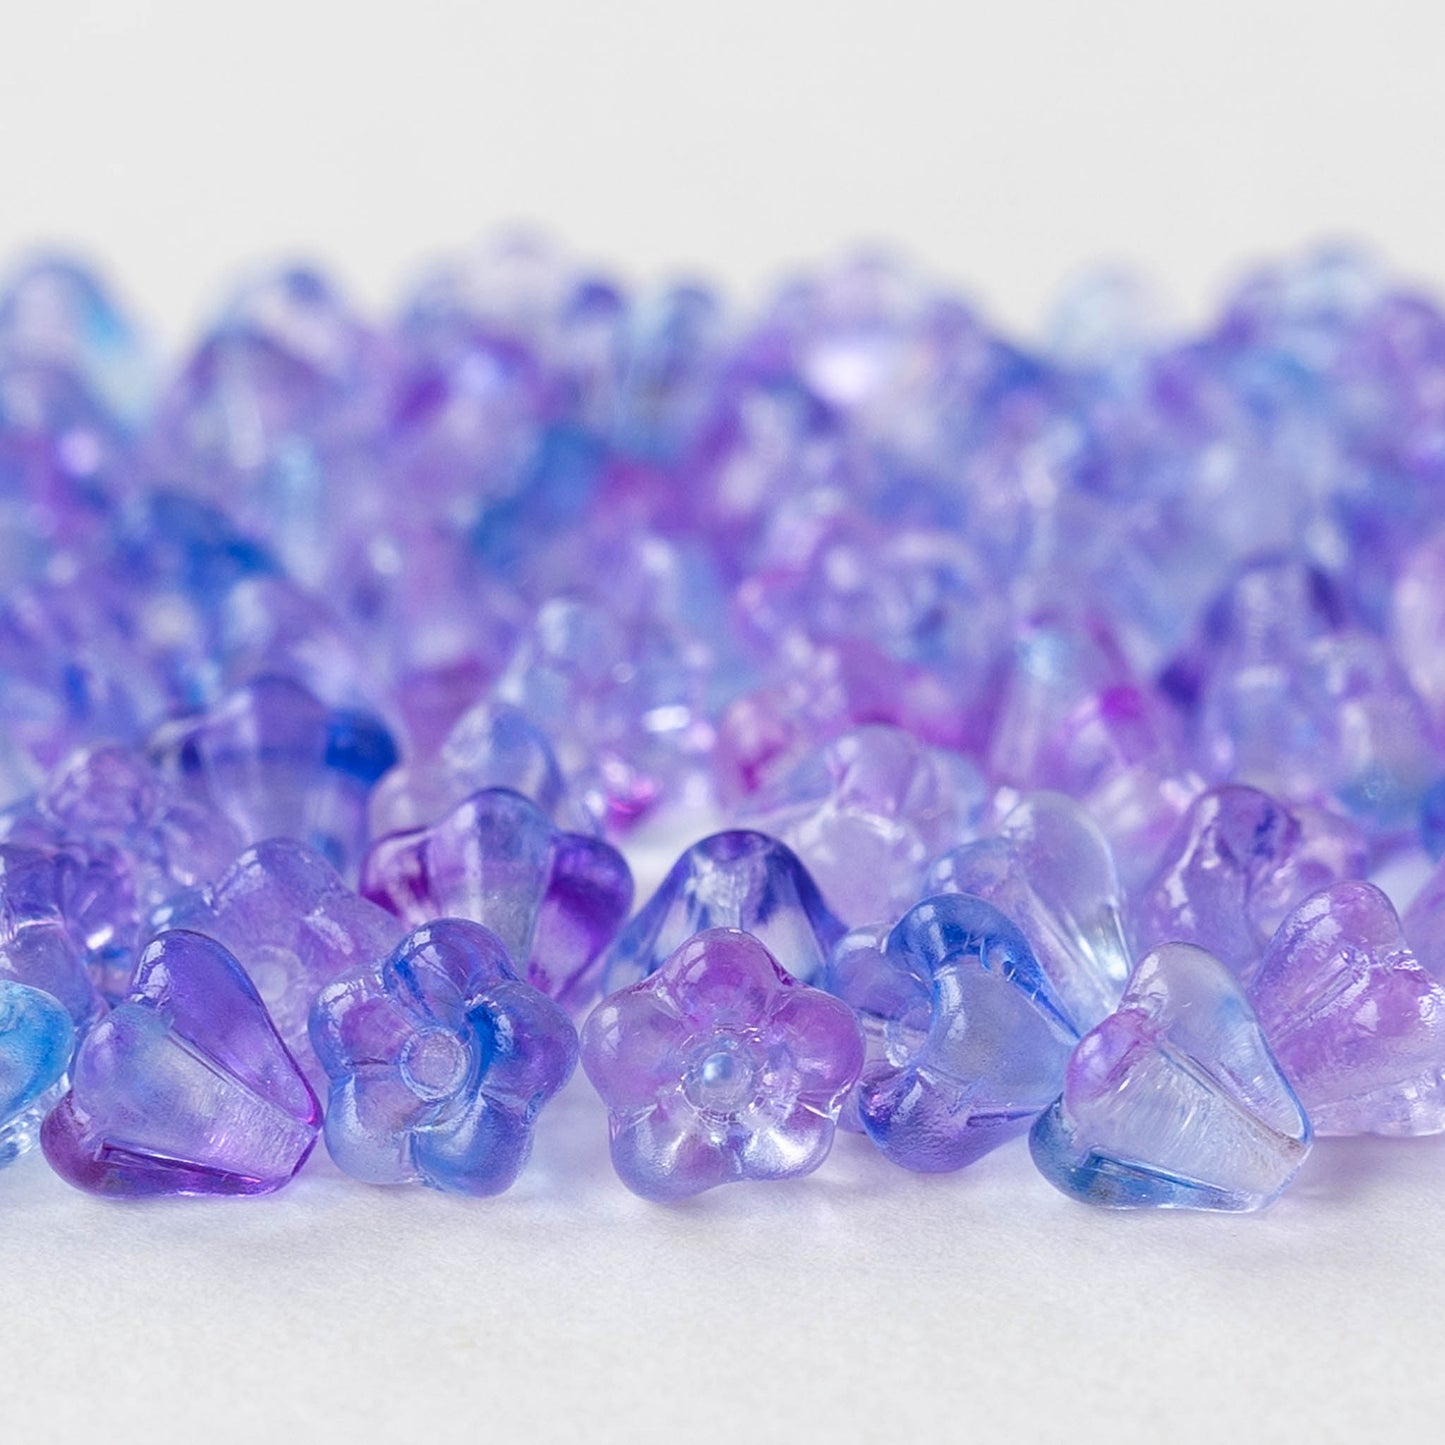 4x6mm Glass Flower Beads - Purple Blue Mix - 50